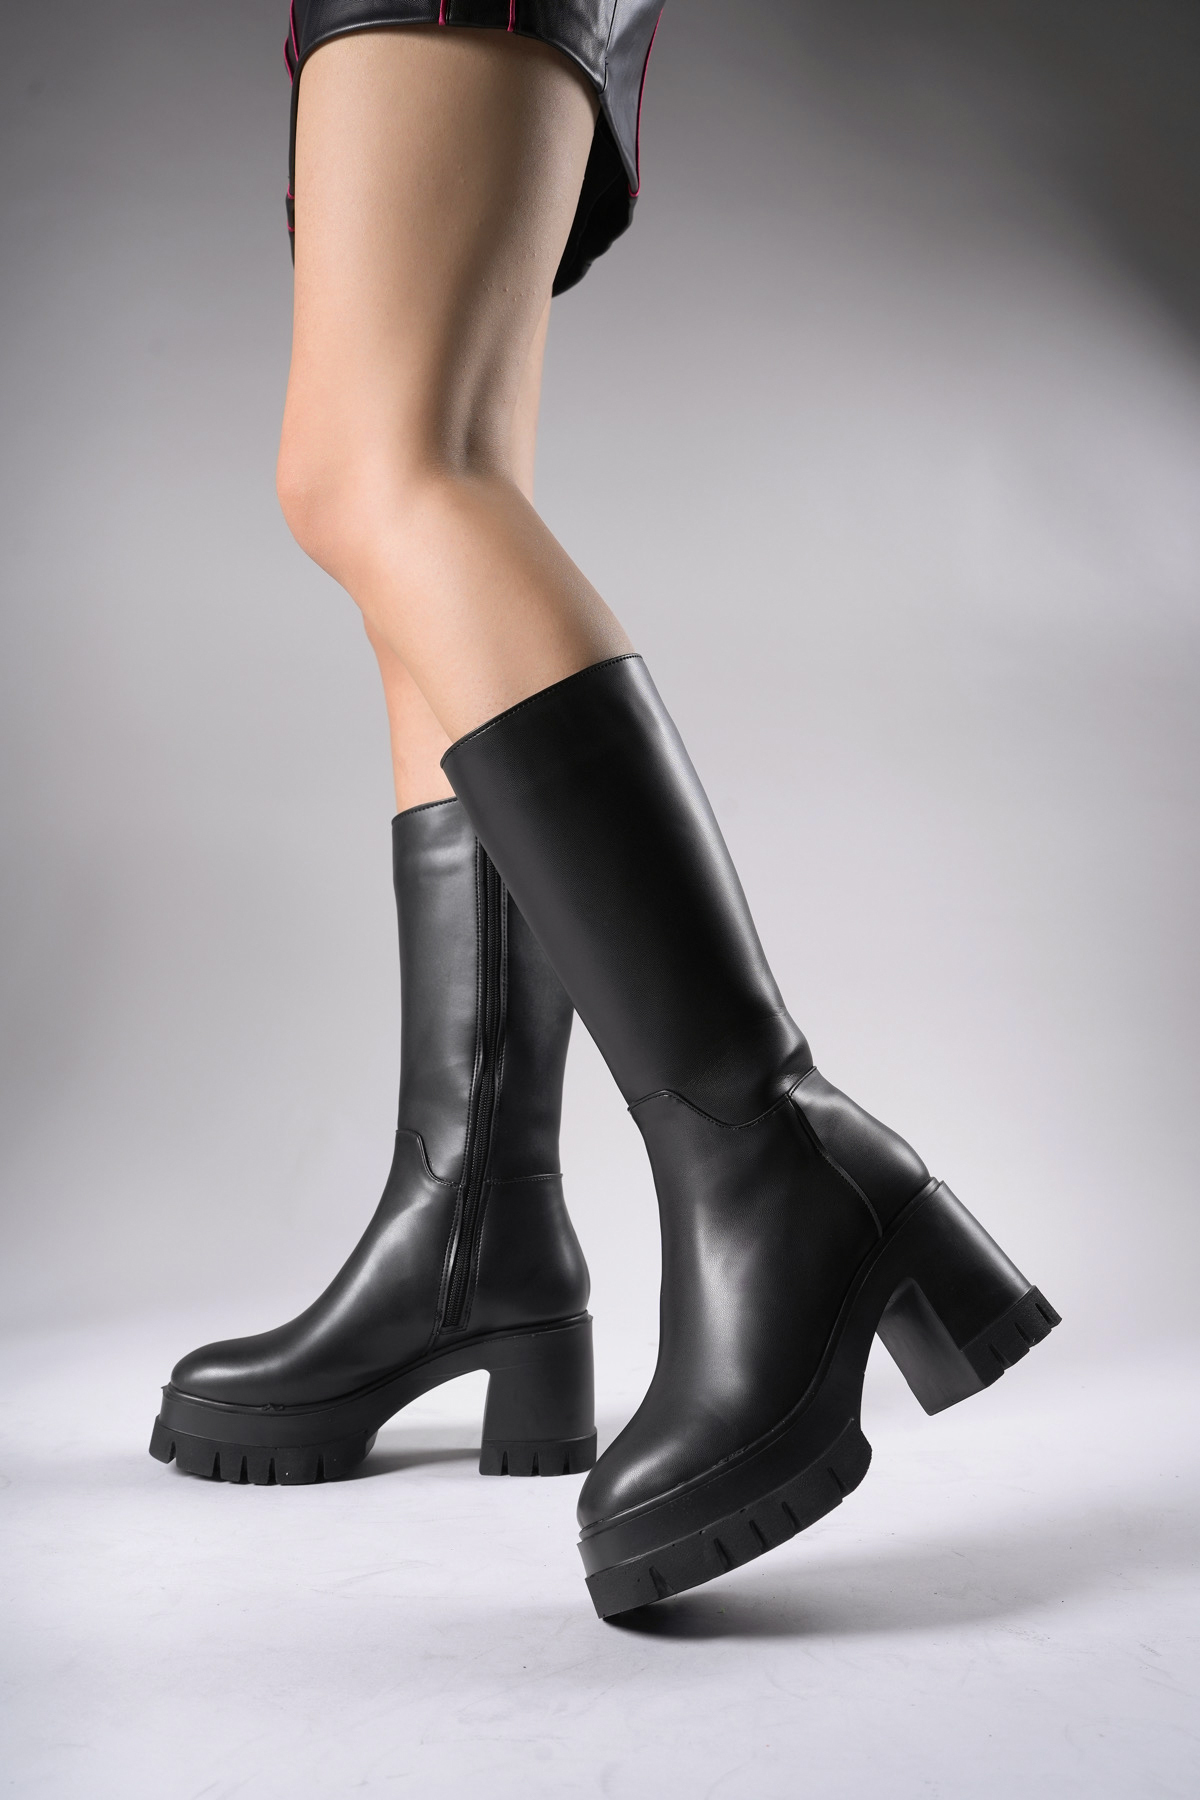 Riccon Lvamel Women's Below Knee Heeled Boots 0012501 Black Skin